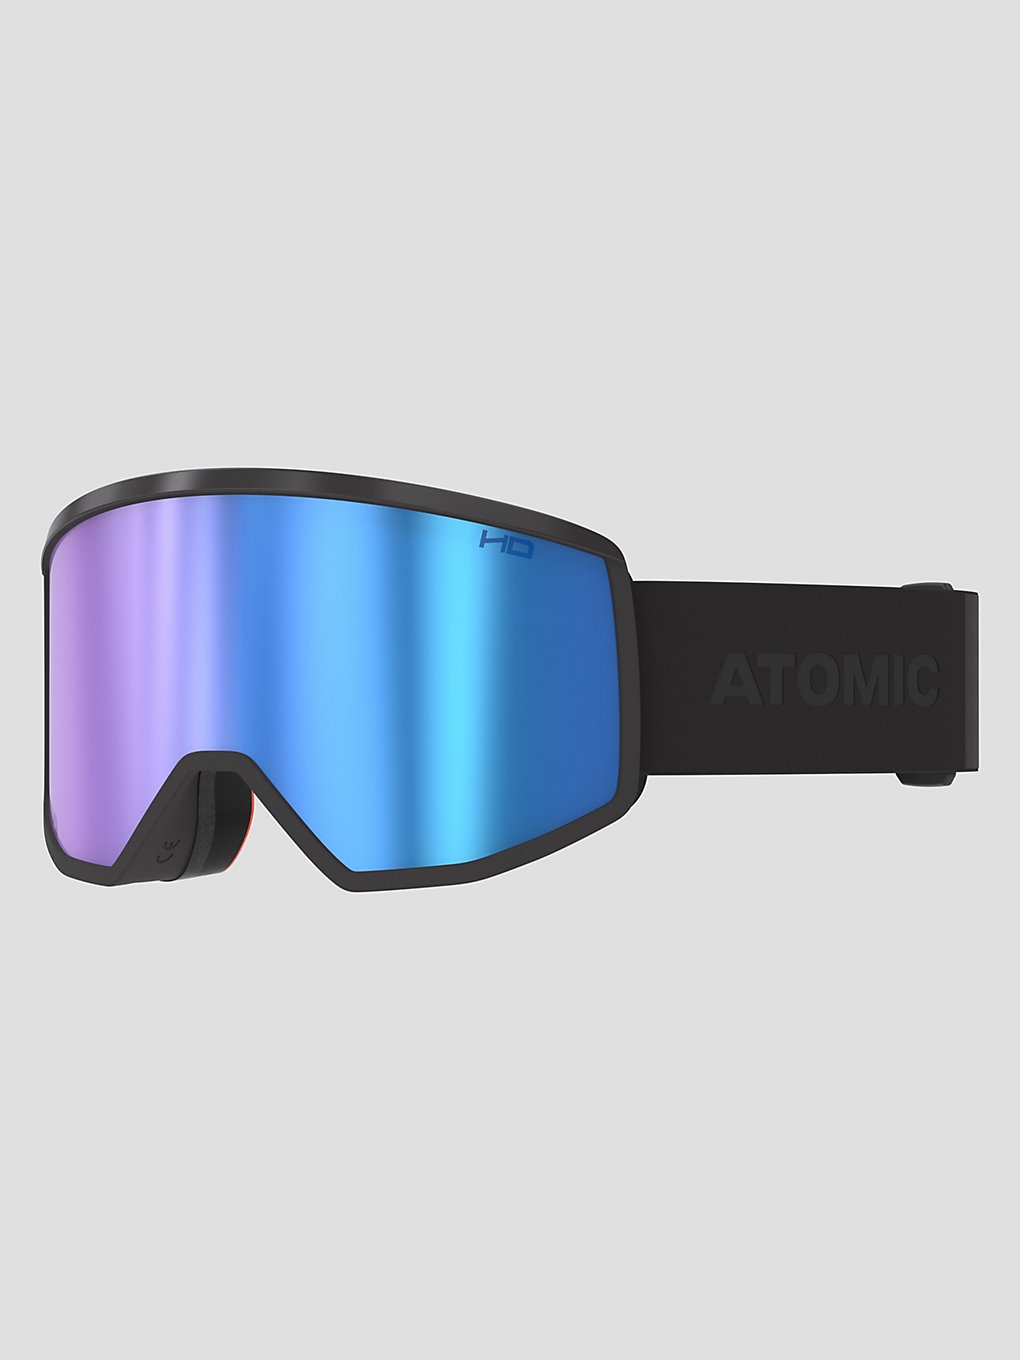 Atomic Four Hd All Black Goggle all black kaufen